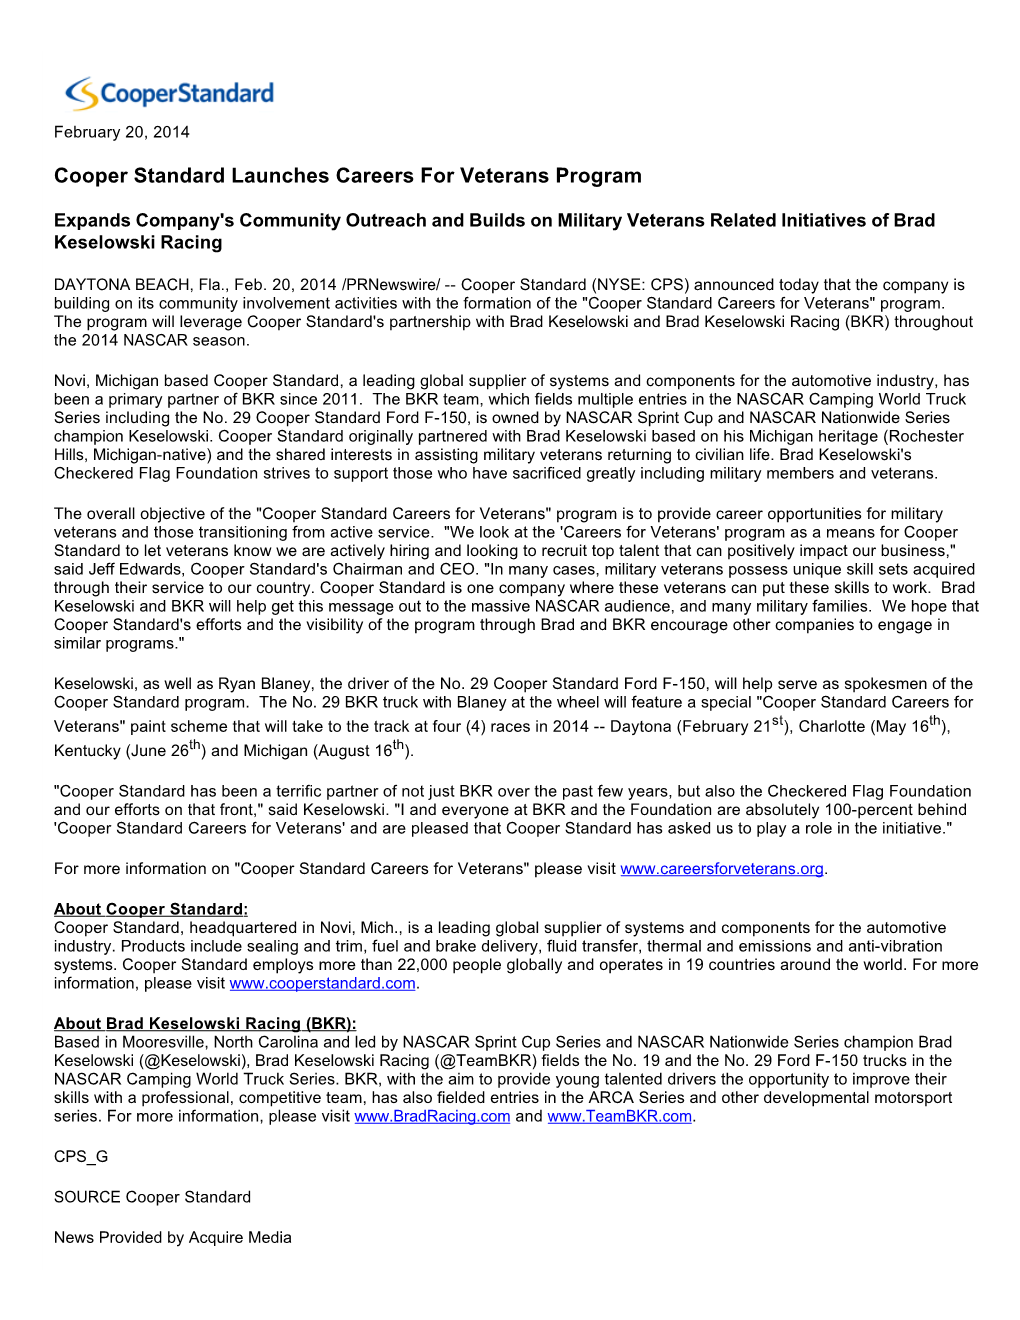 Cooper Standard Launches Careers for Veterans Program